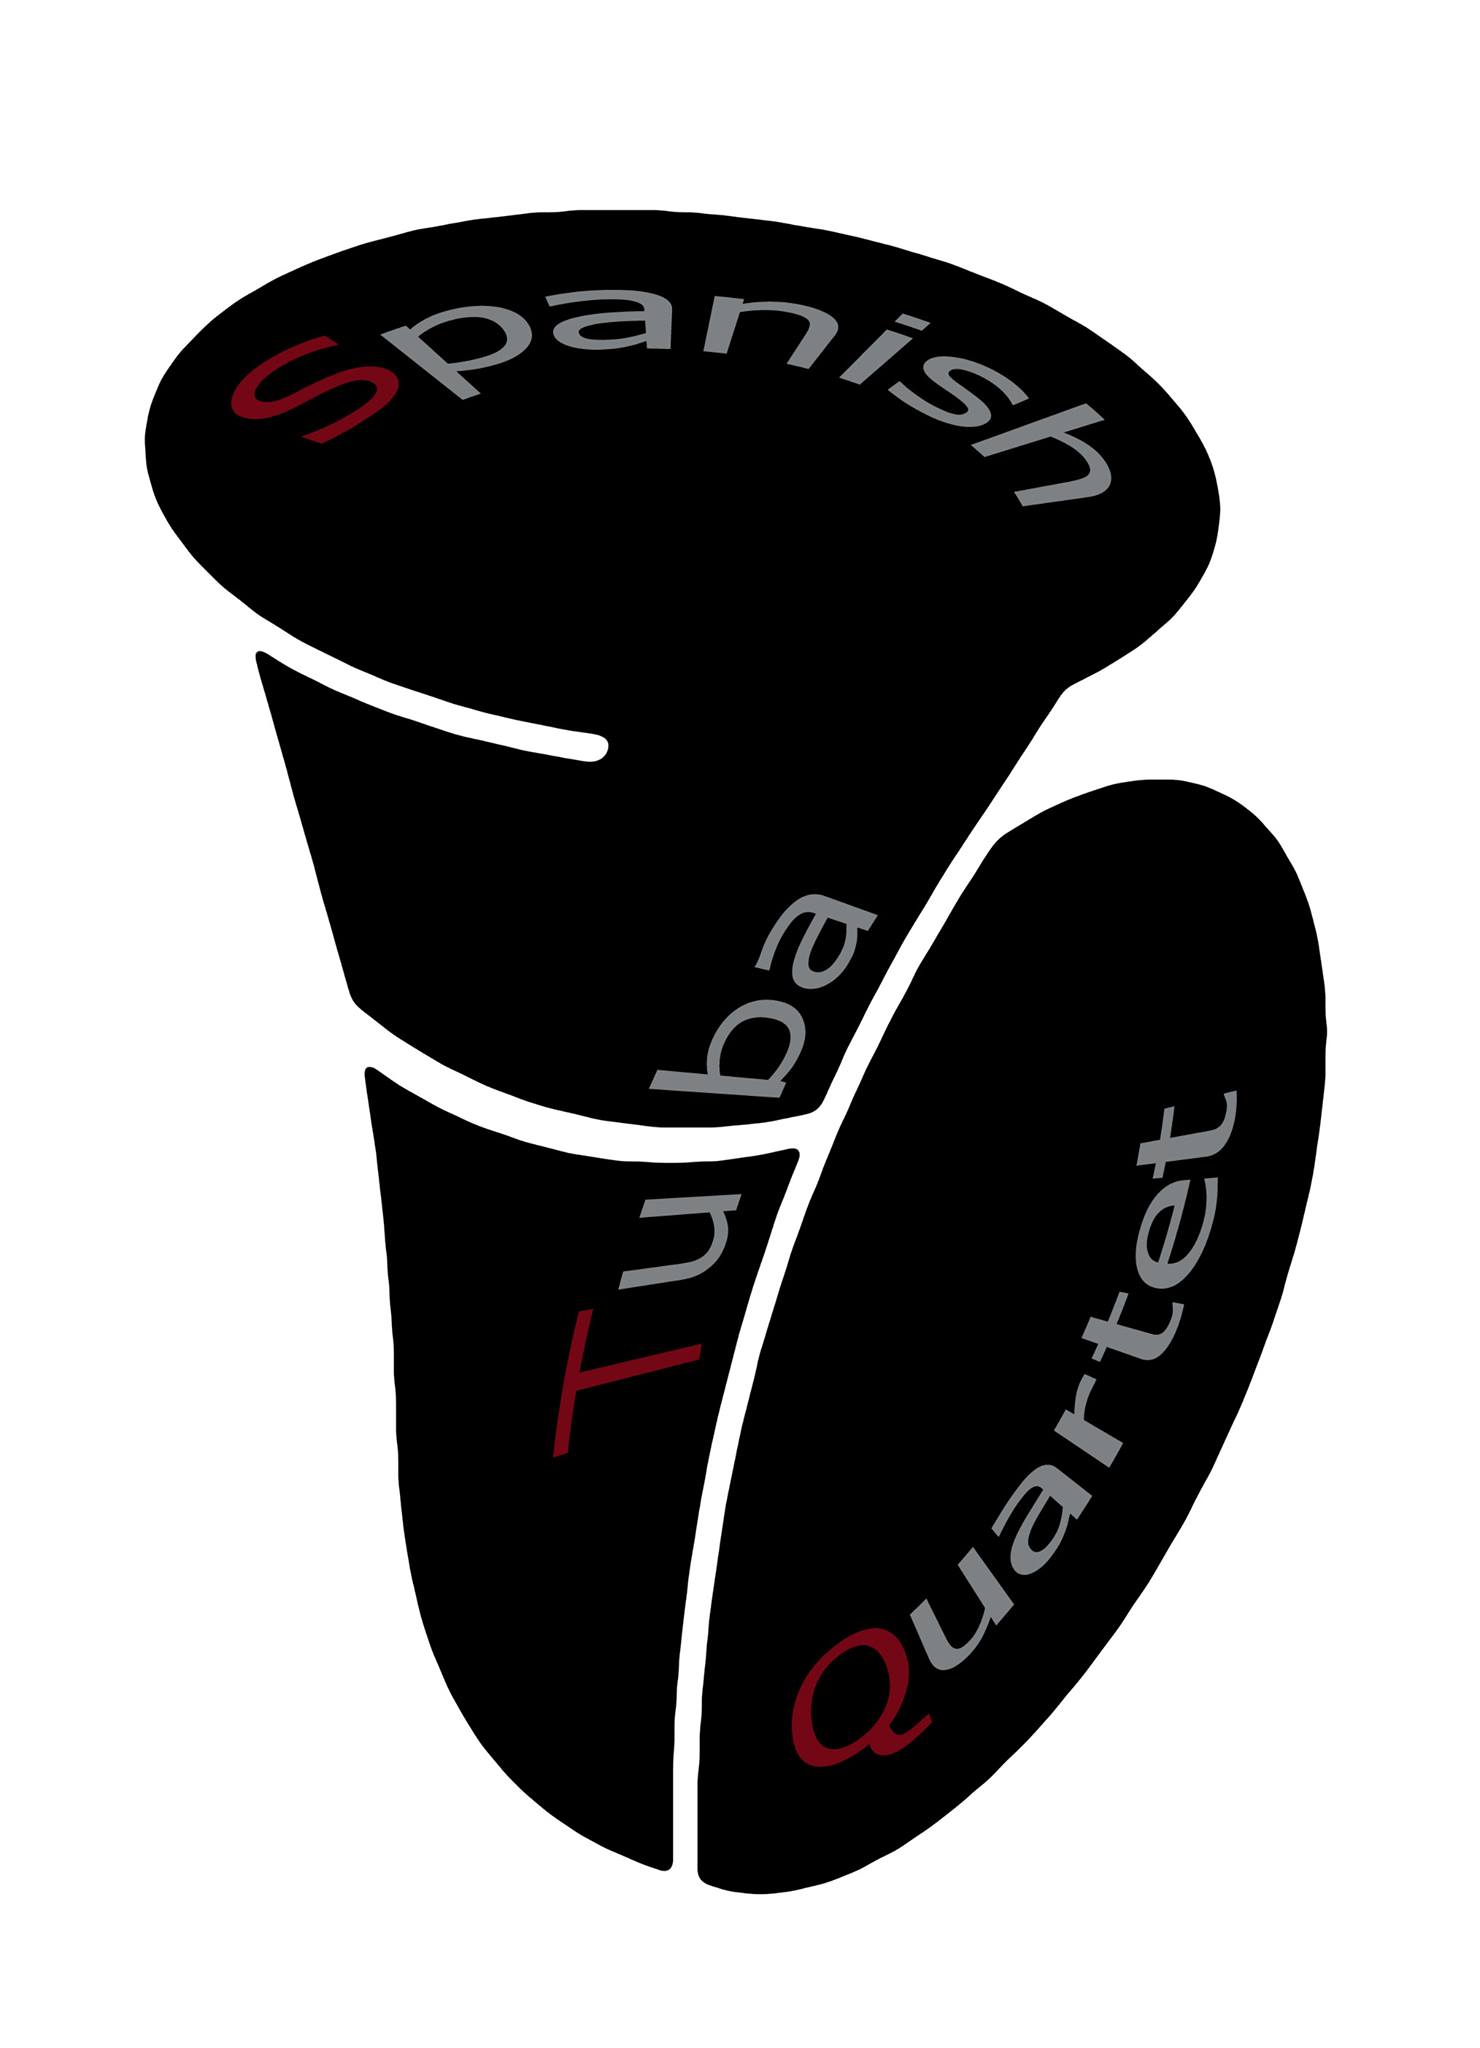 Spanish Tuba Quartet